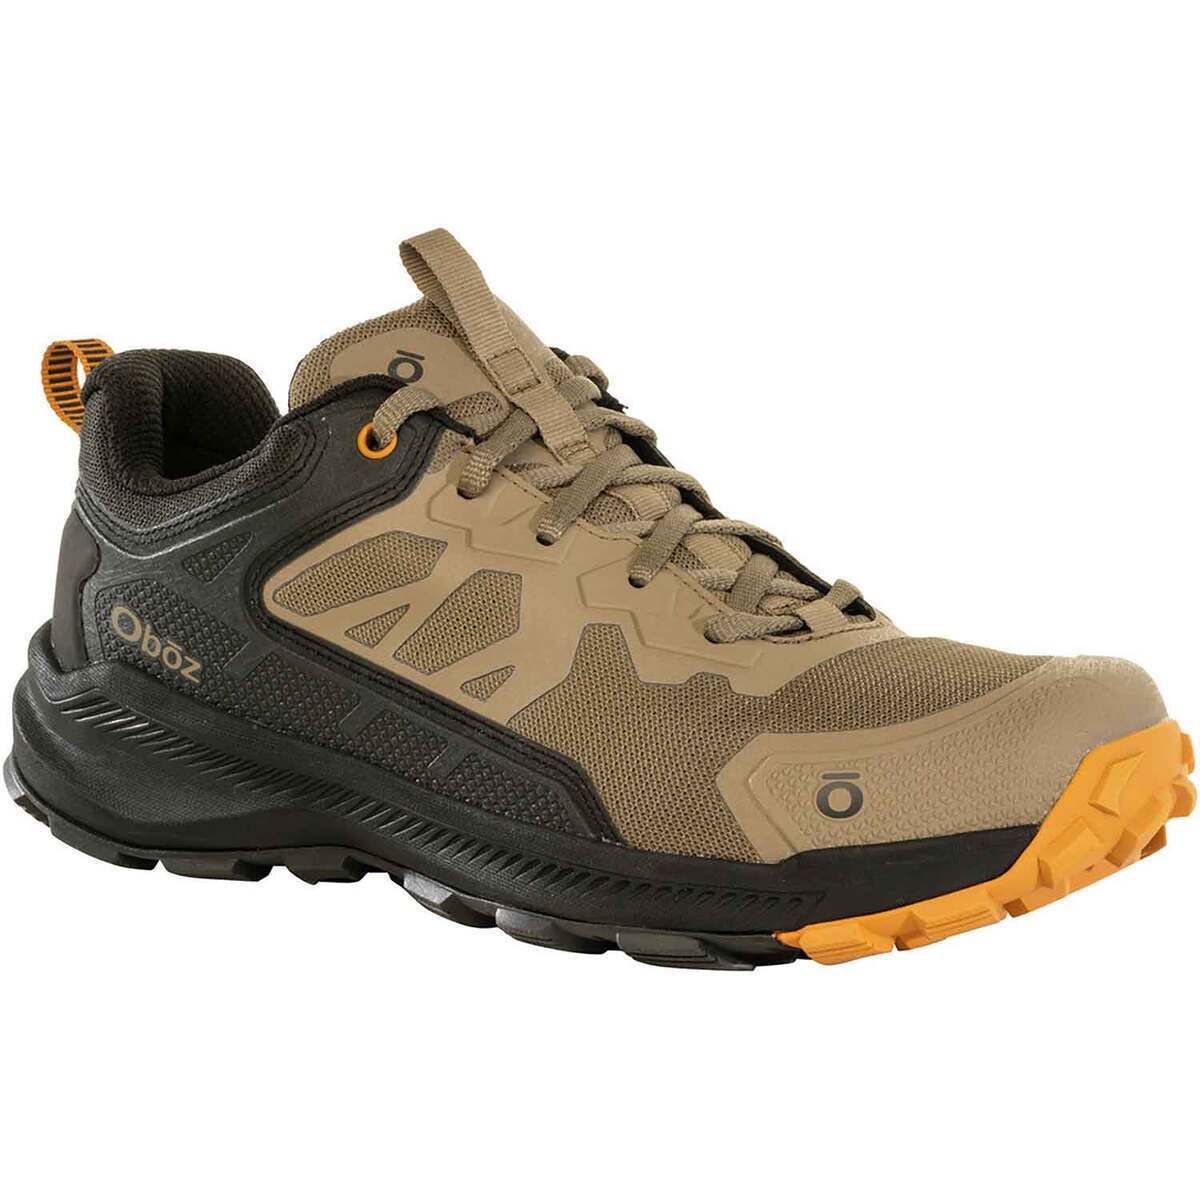 Oboz Men's Katabatic Low Hiking Shoes | Sportsman's Warehouse